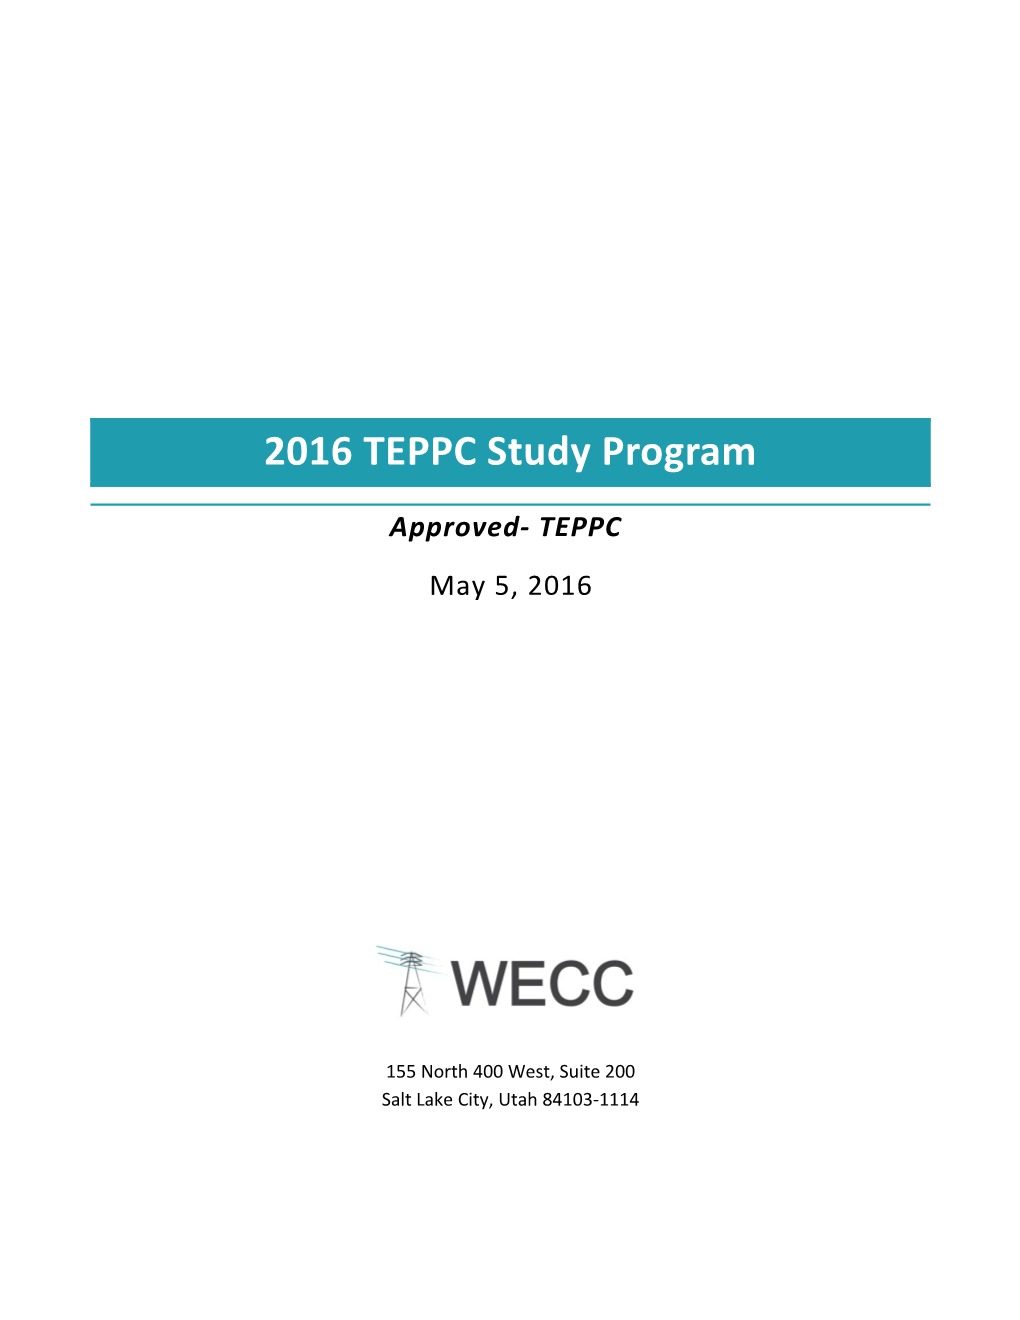 2016 TEPPC 2016 Study Program - Approved